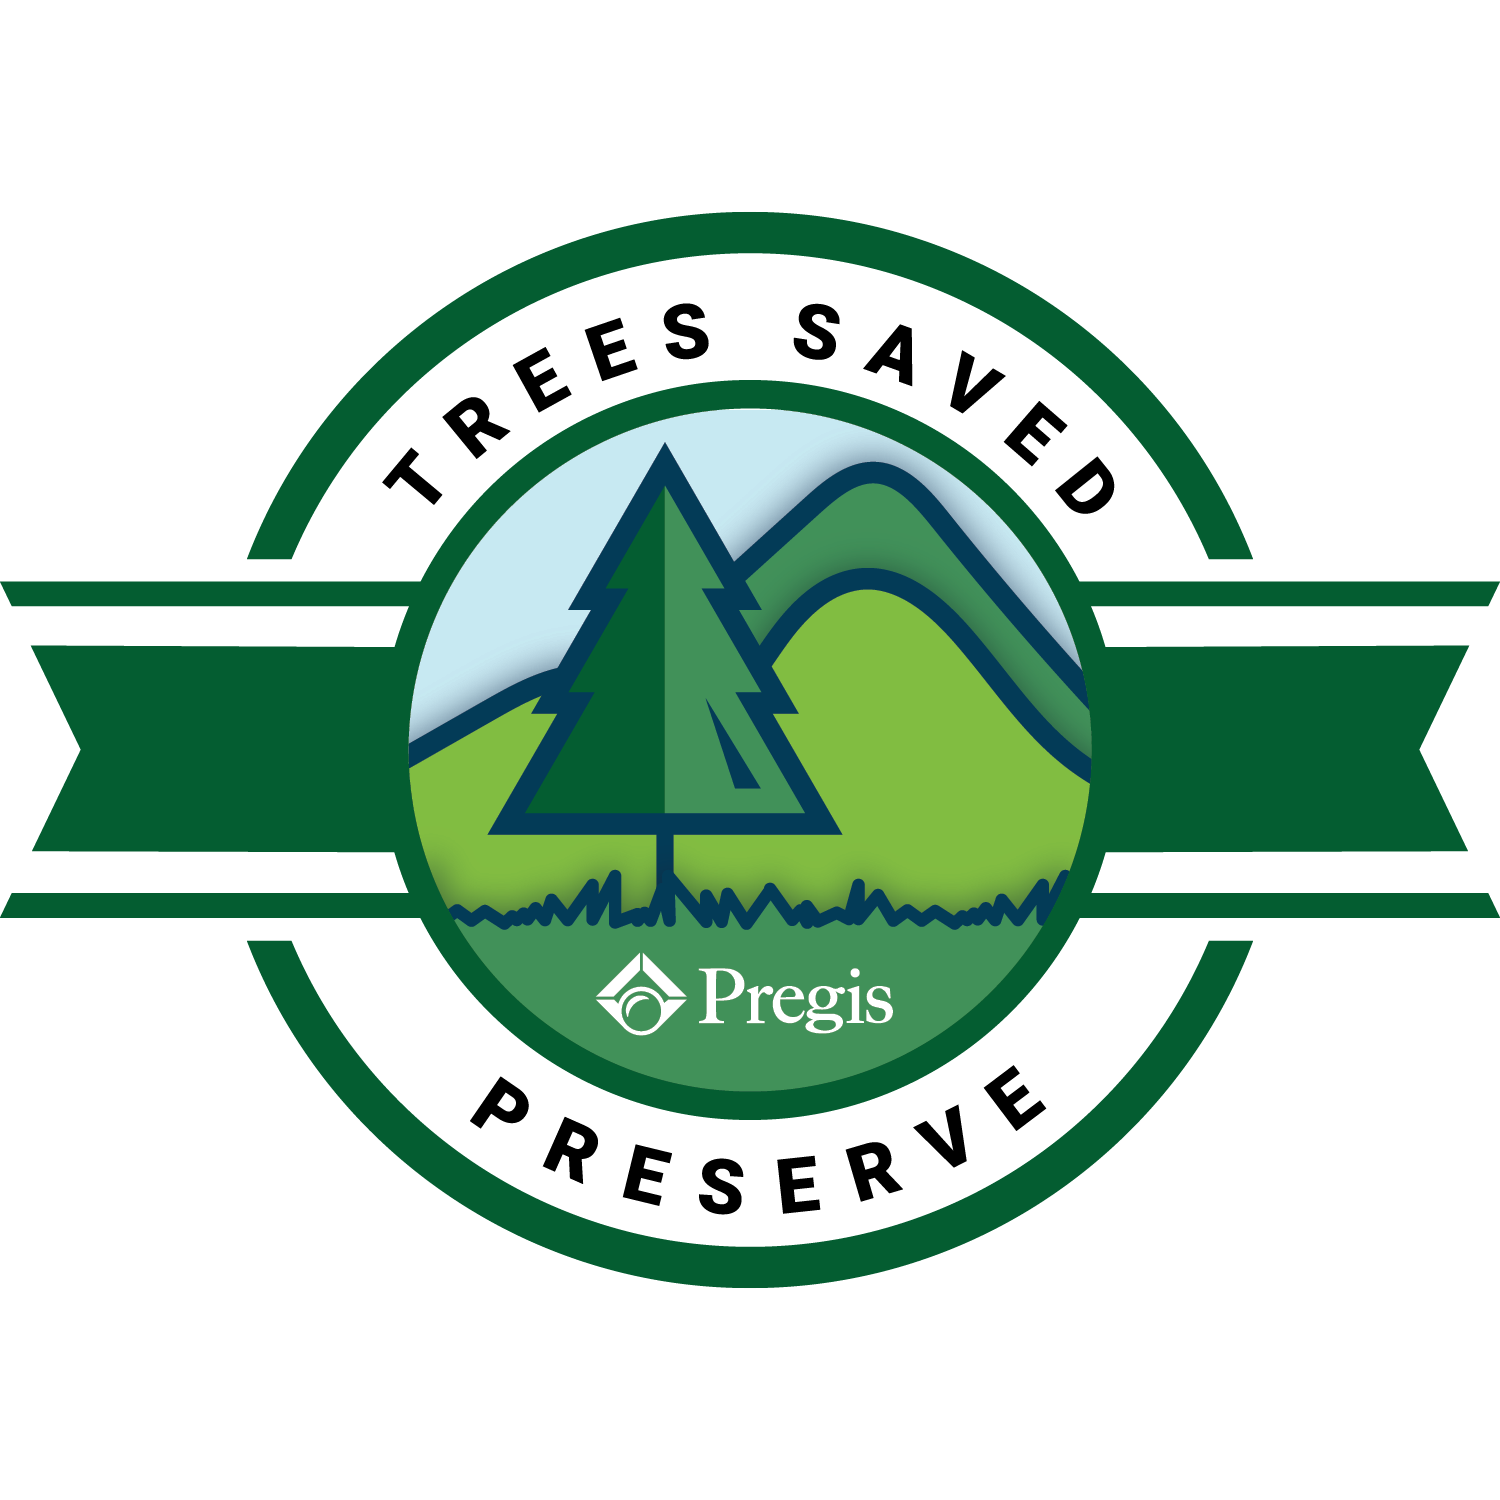 pregis-preserve-badge.png